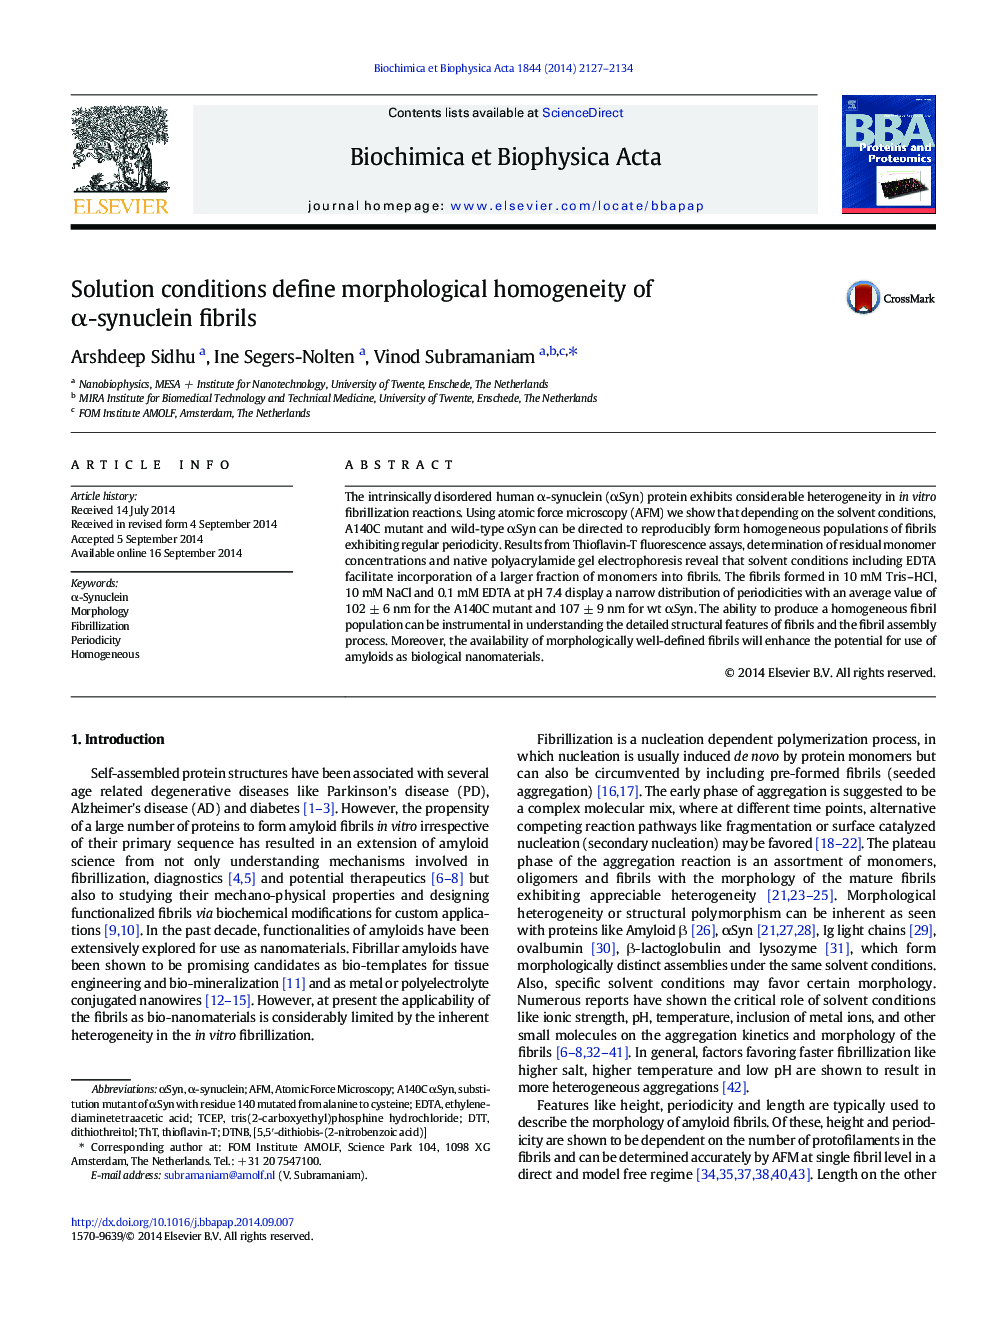 Solution conditions define morphological homogeneity of Î±-synuclein fibrils